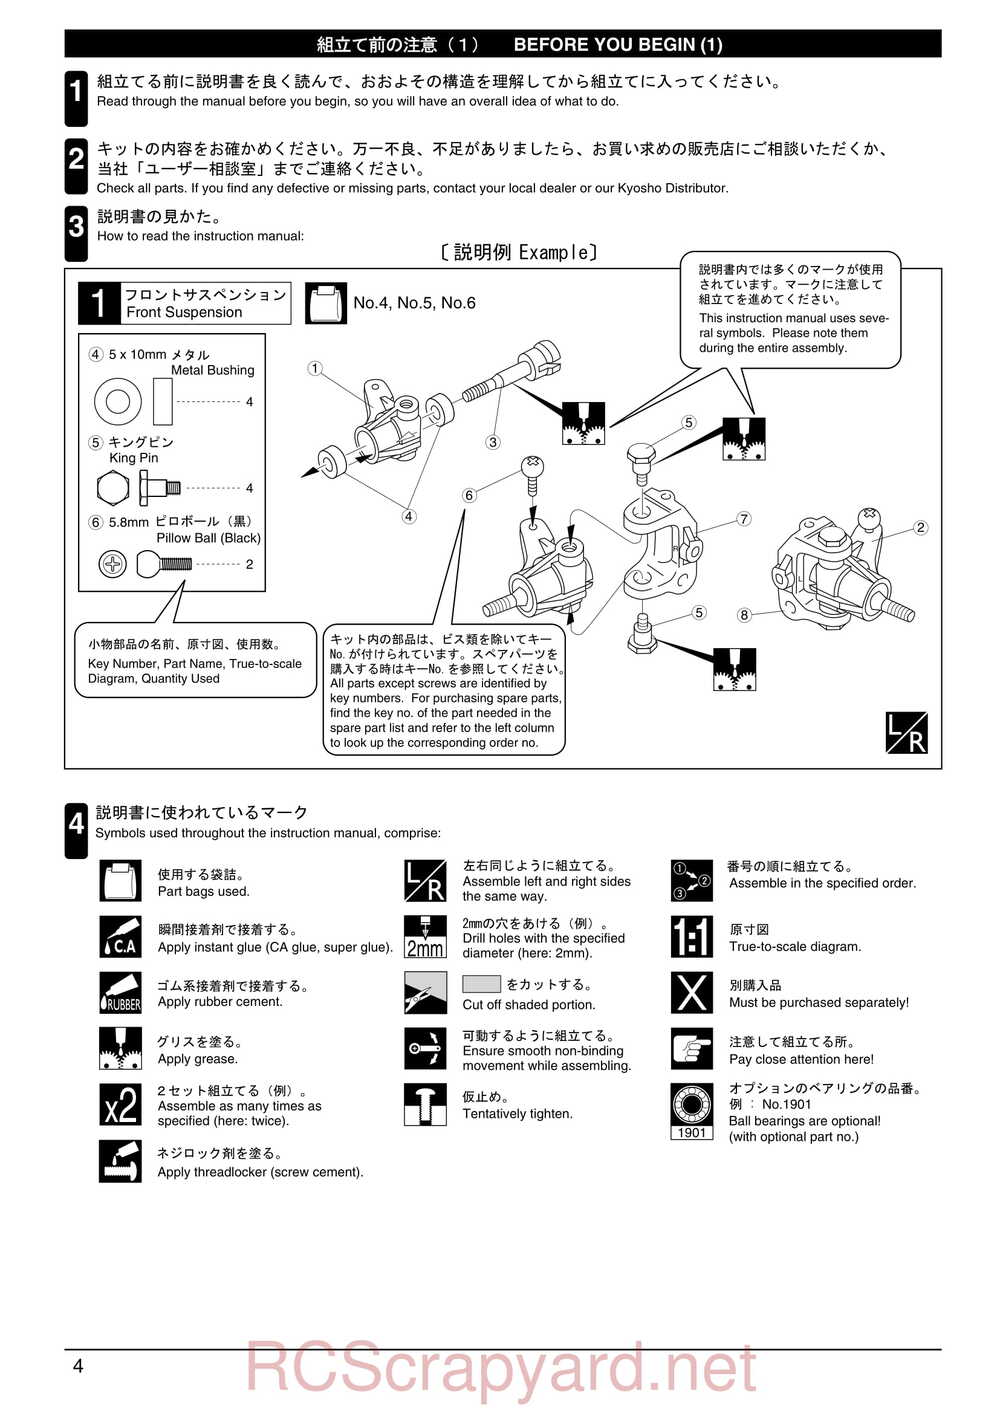 Kyosho - 30101 - KX-One - Manual - Page 04